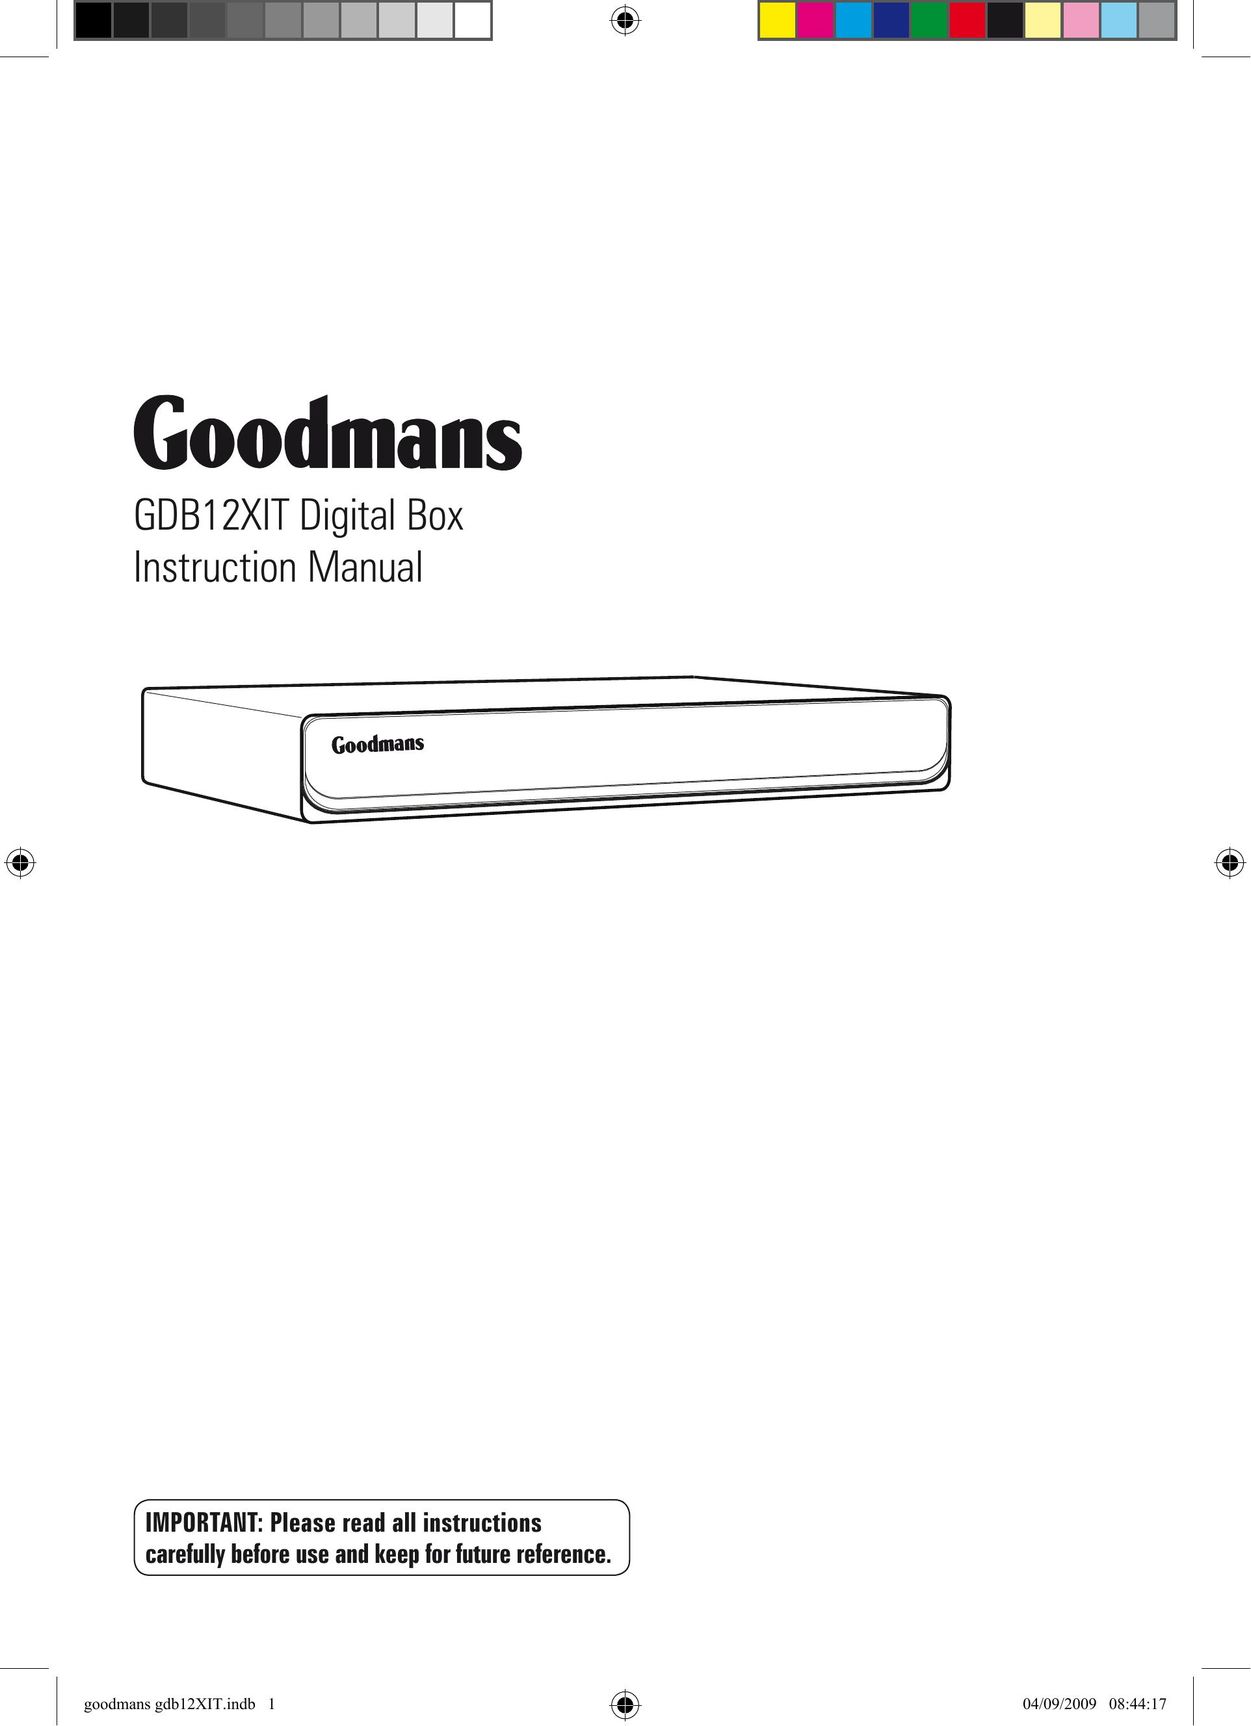 Goodmans GDB12XIT Cable Box User Manual